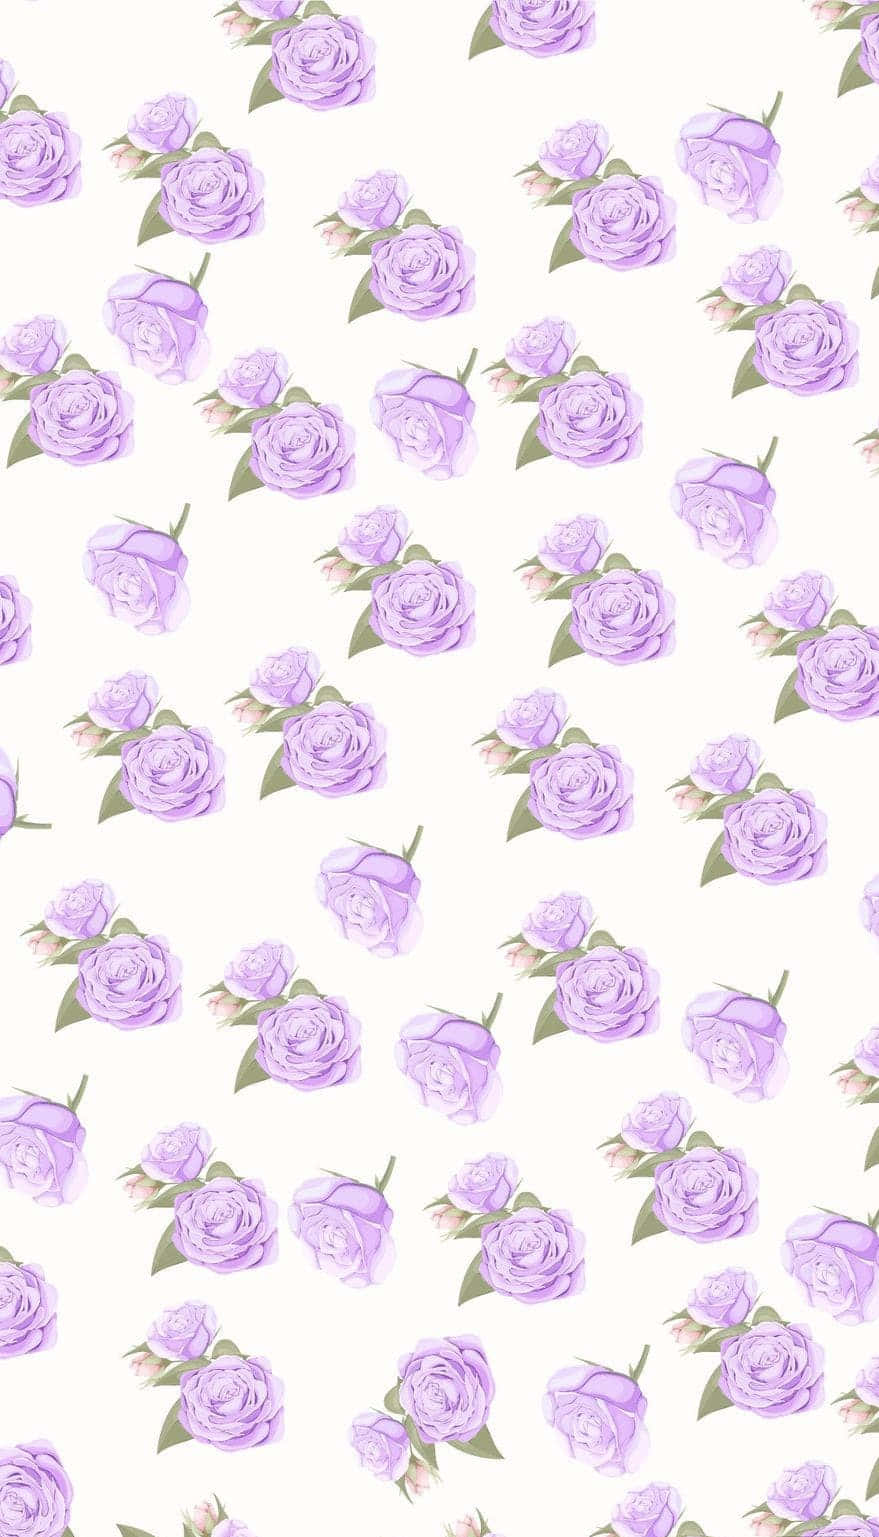 Lilarosen Blumen Hintergrundmuster Design